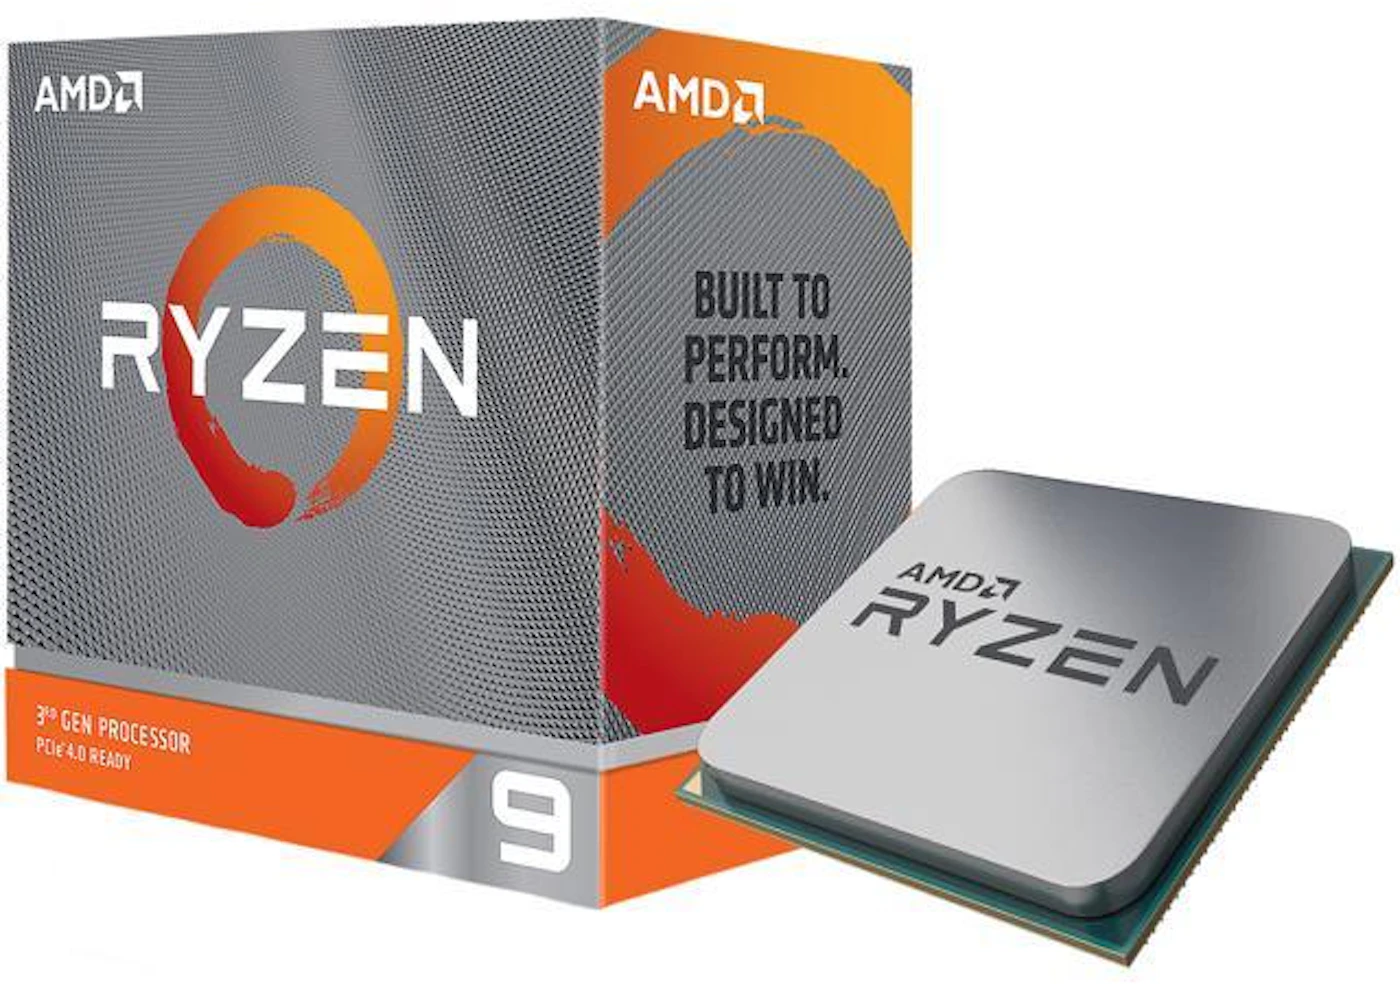 AMD Ryzen 9 3950X Desktop Processor - US